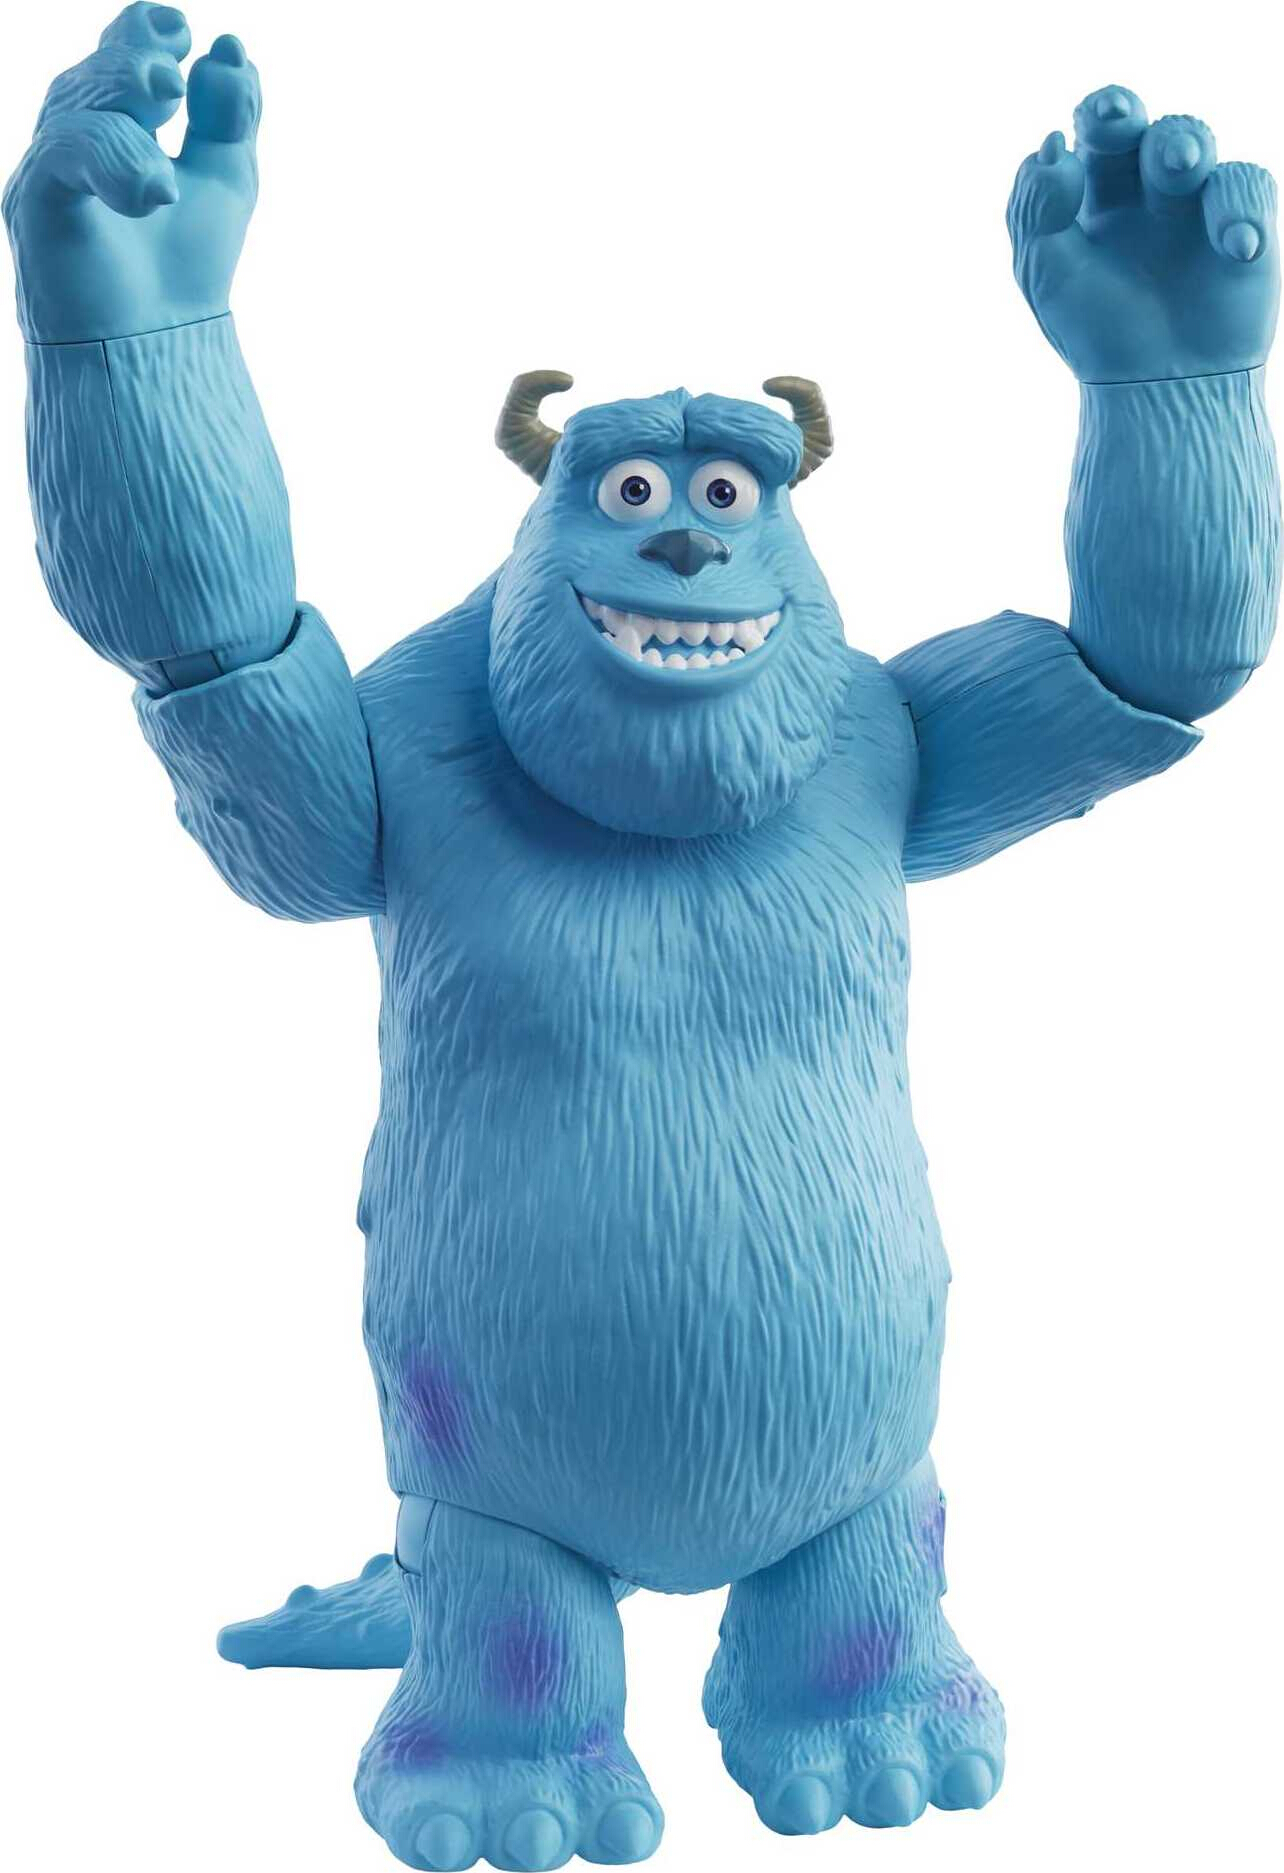 Disney Pixar Monsters Inc Action Figure Sulley James P Sullivan Character - image 4 of 7